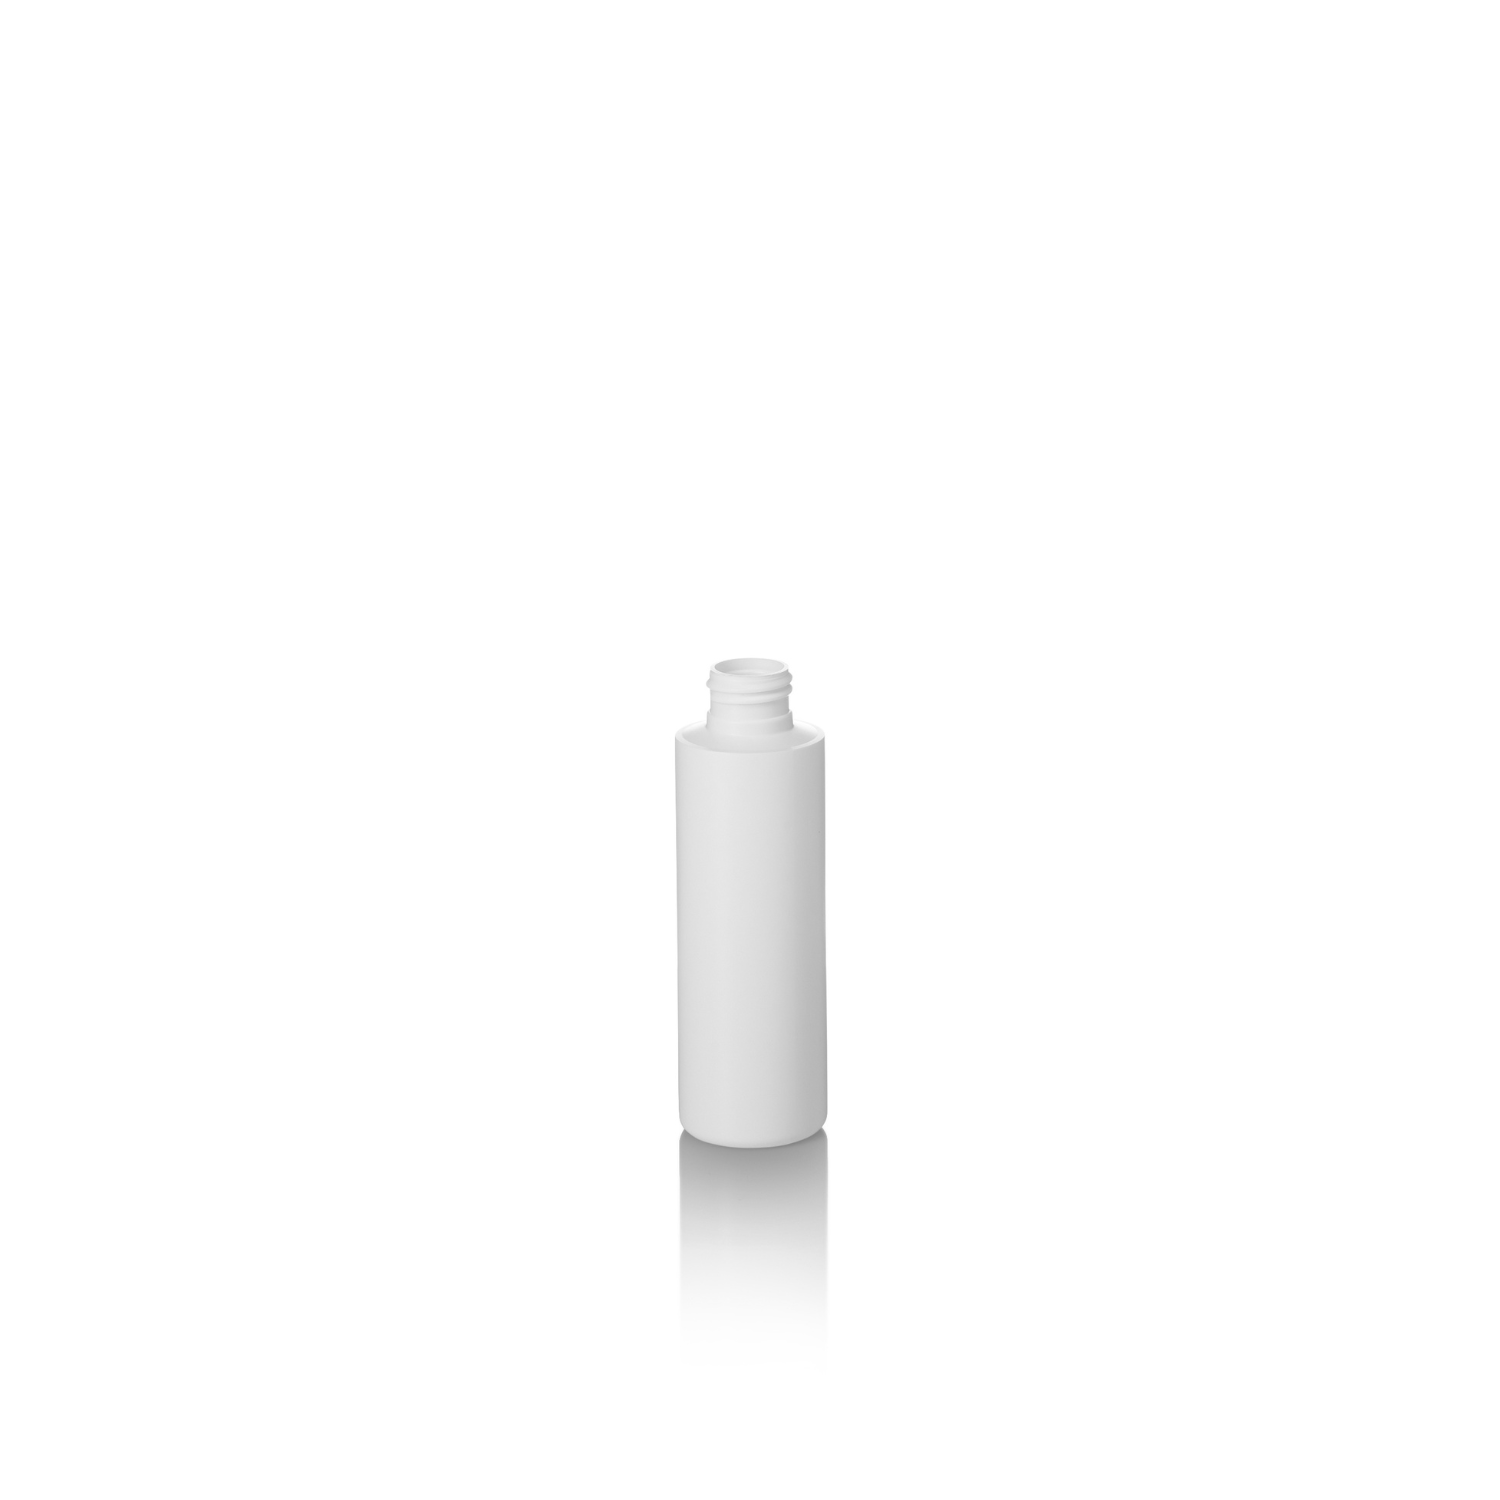 125ml White HDPE 30% PCR Tubular Bottle